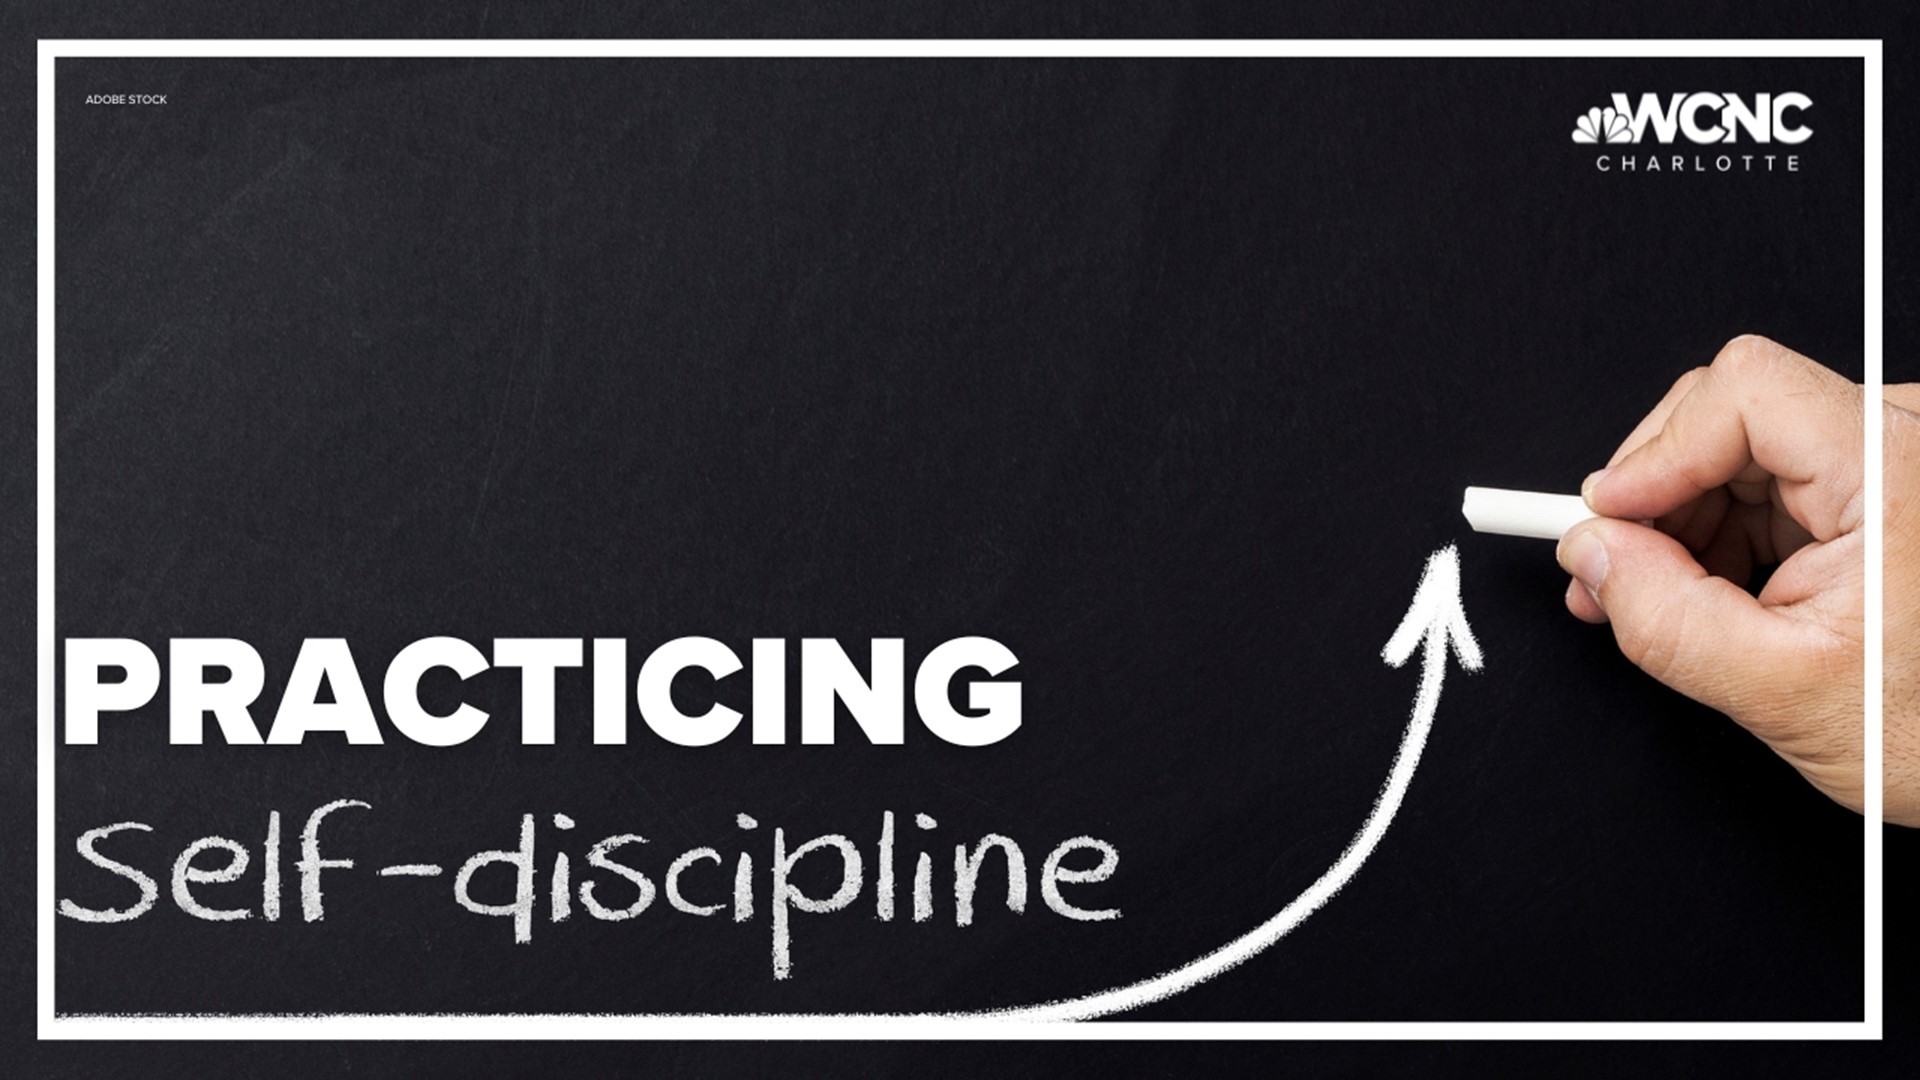 Coach LaMonte explains the importance of self-discipline.